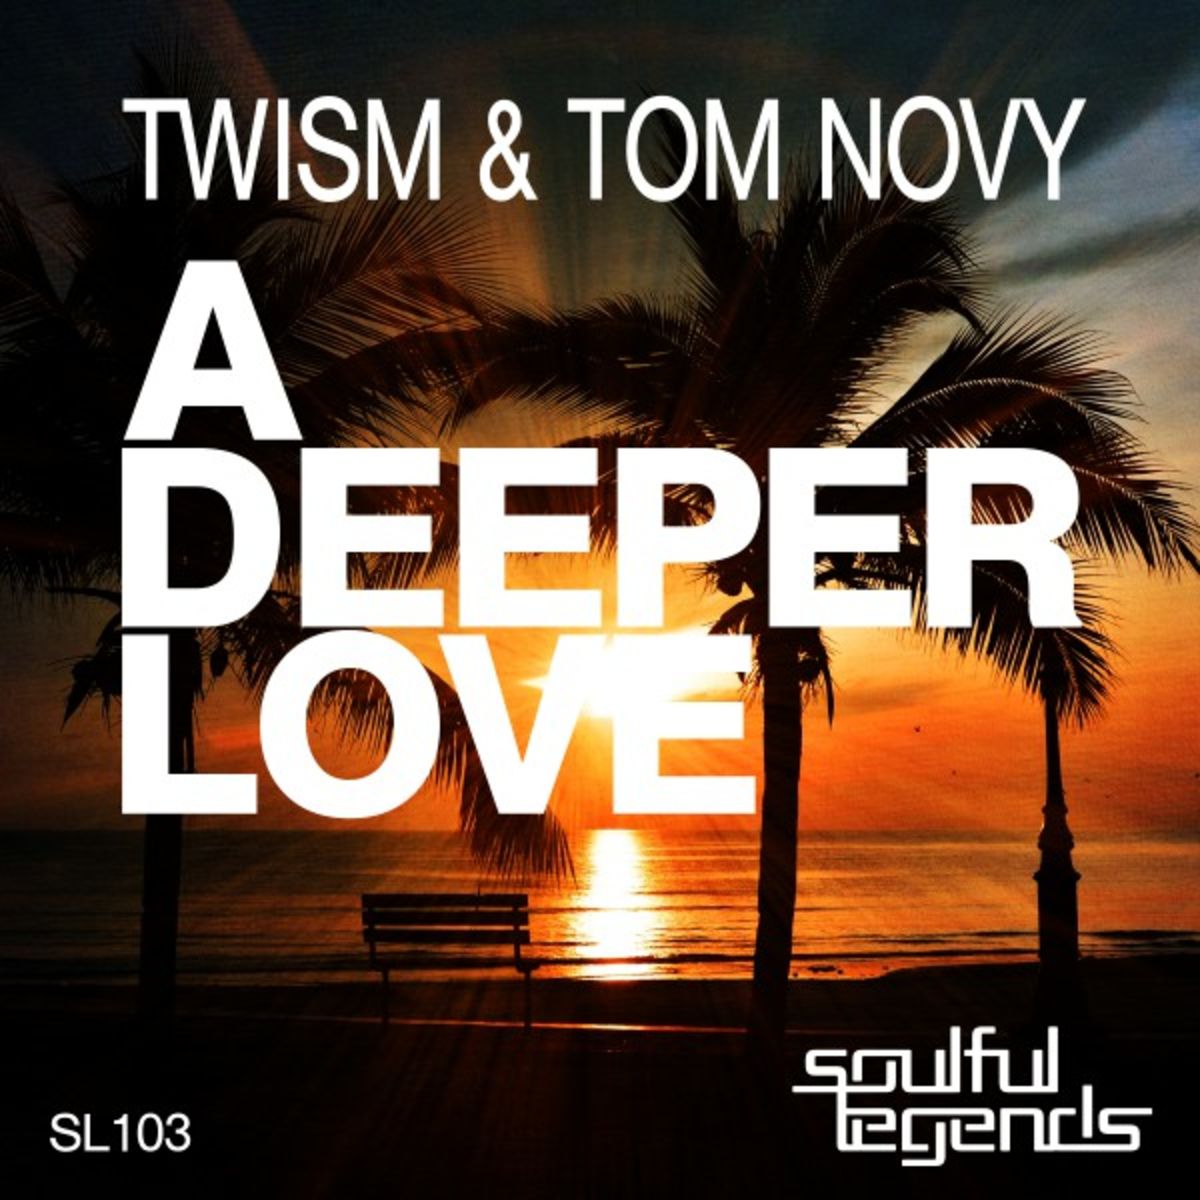 Twism & Tom Novy - A Deeper Love / Soulful Legends